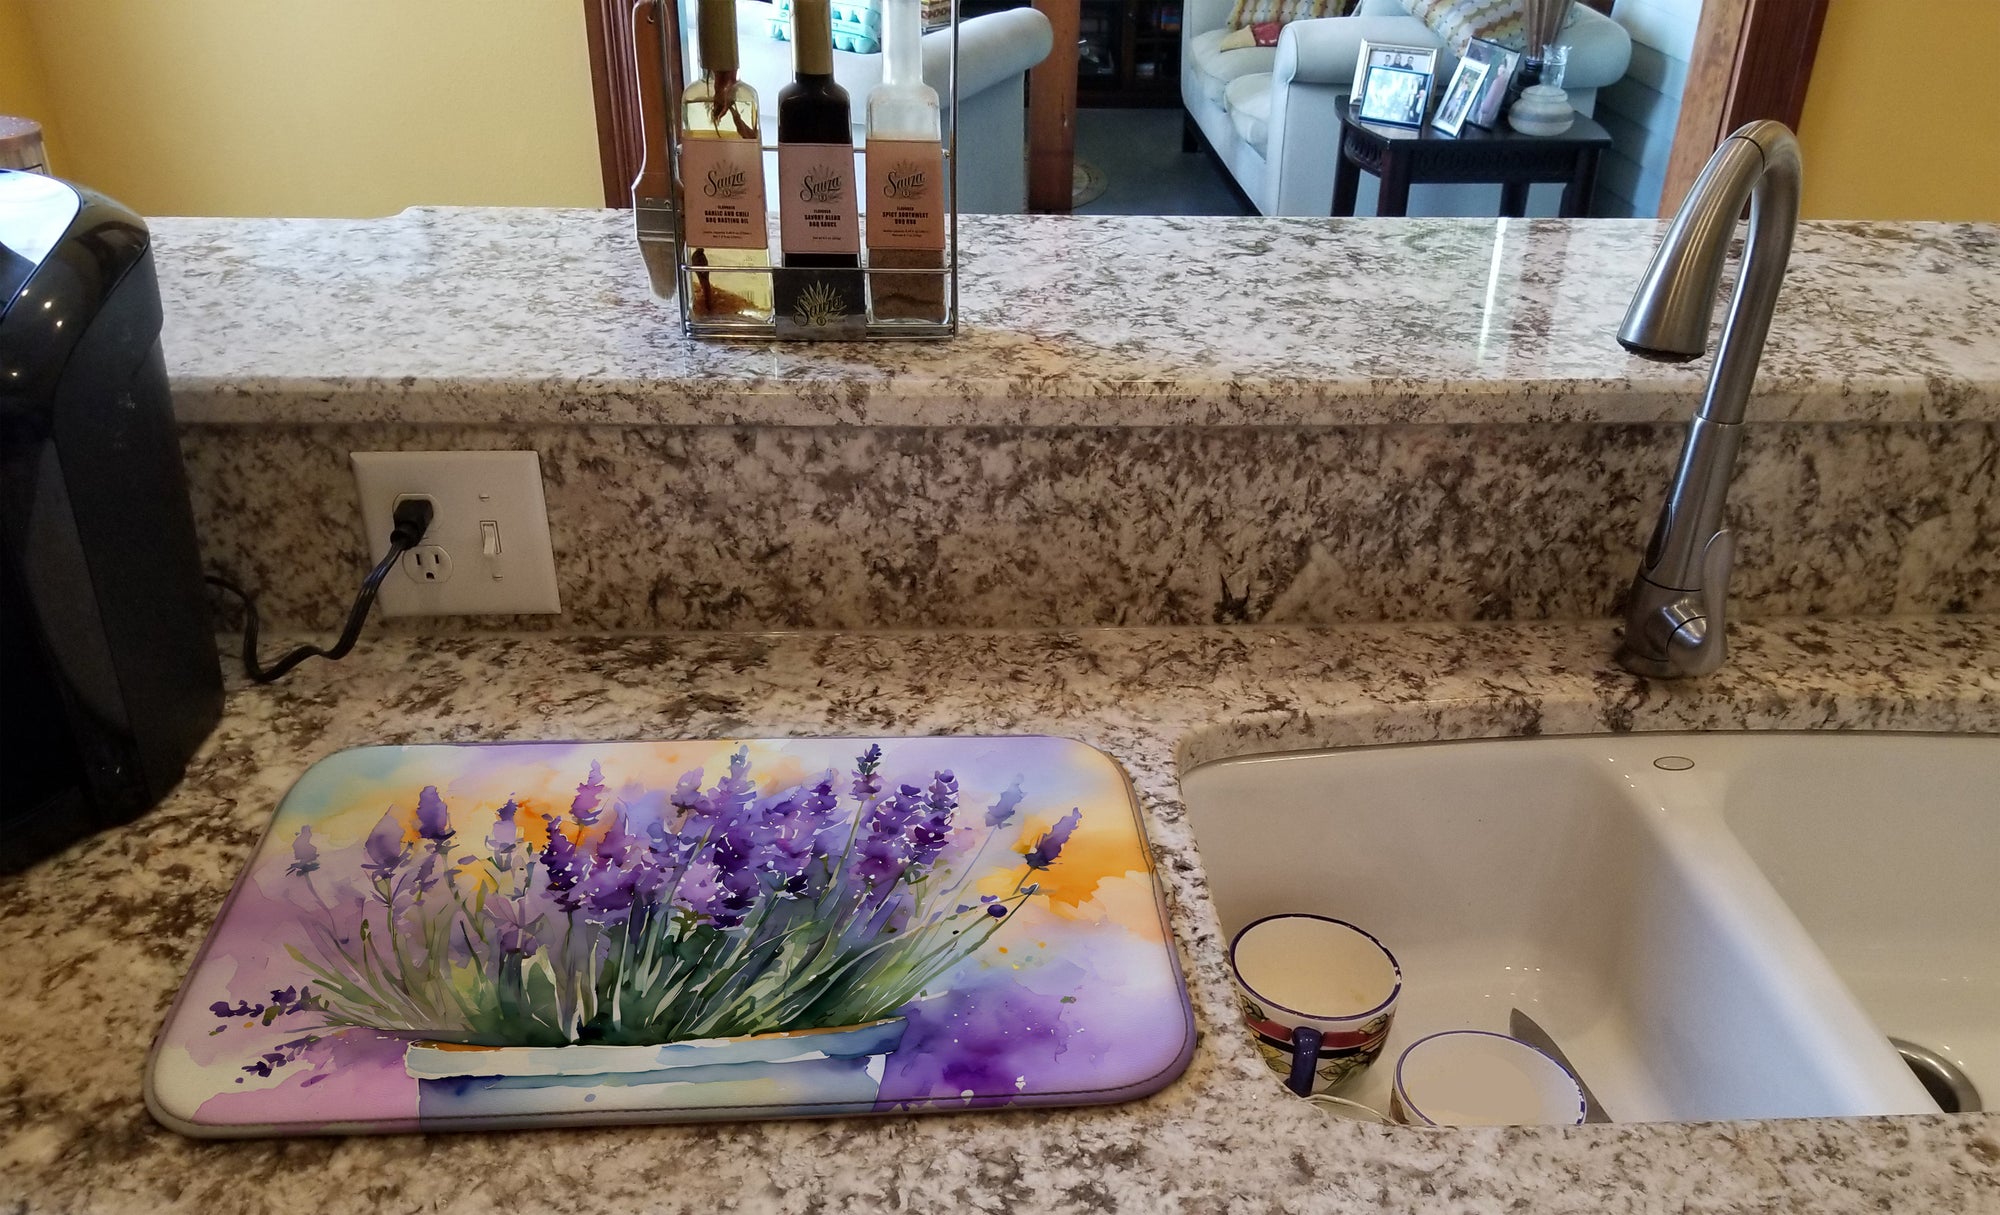 Buy this Lavender in Watercolor Dish Drying Mat